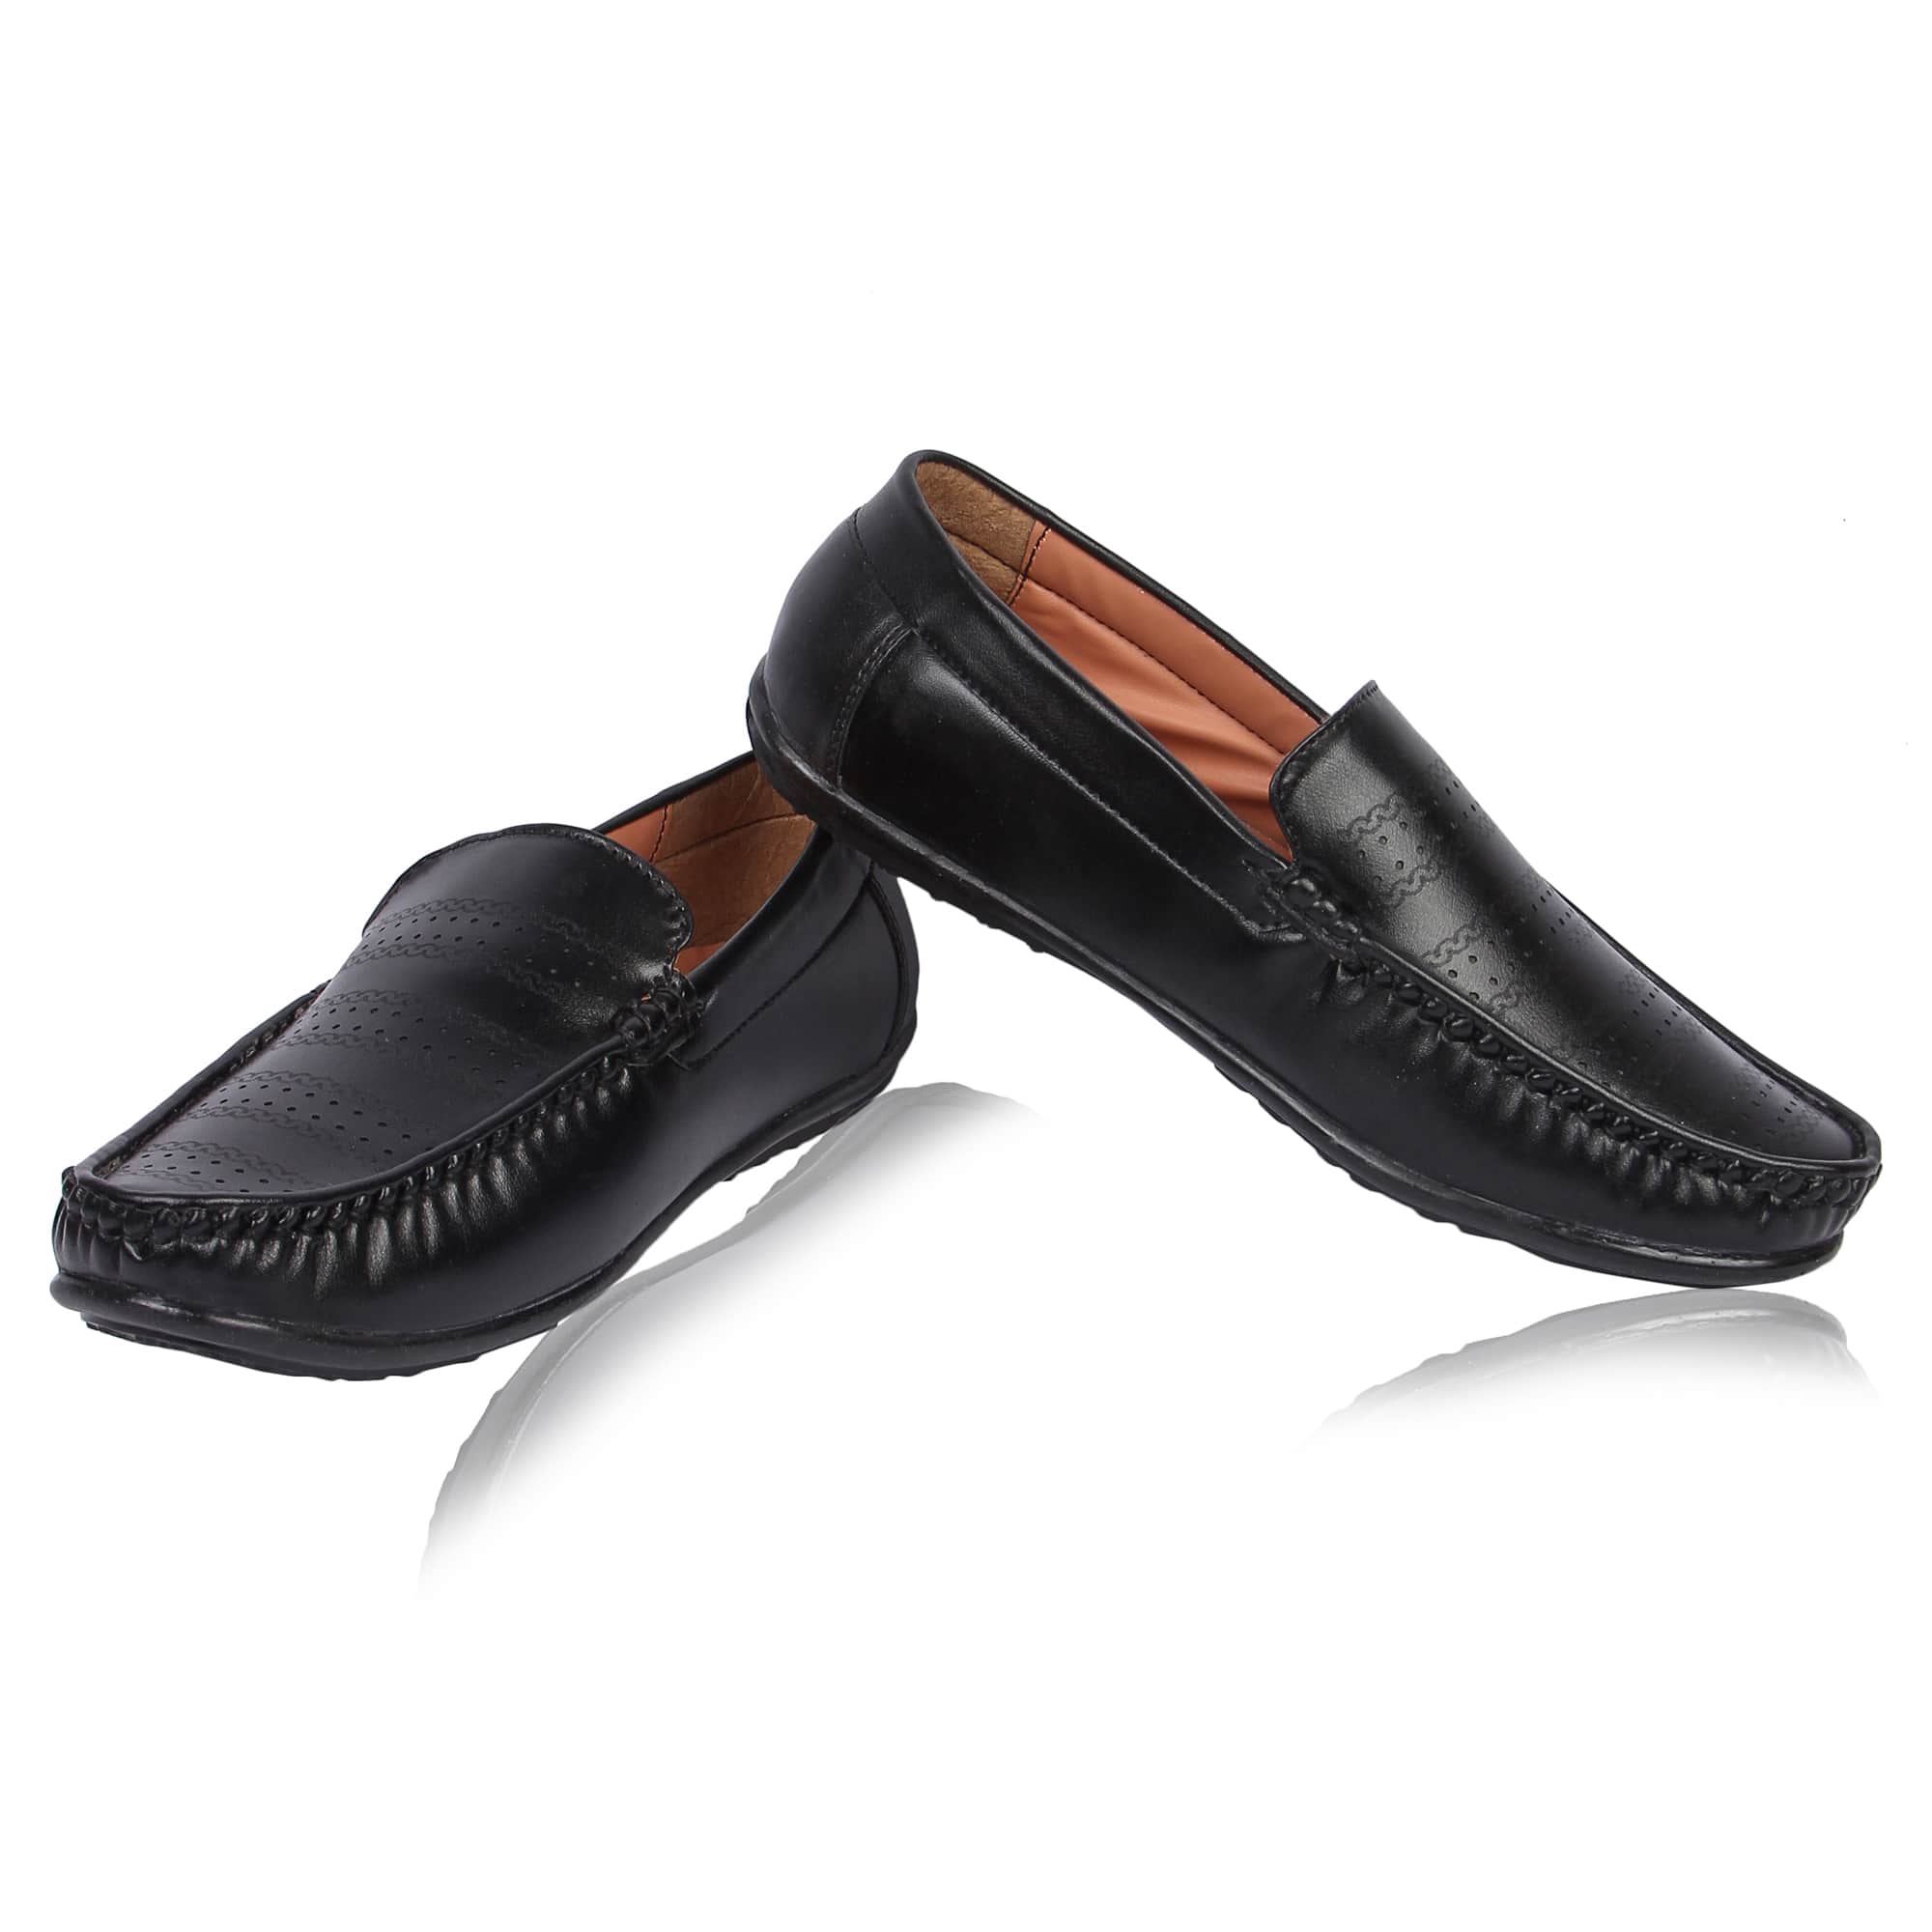 IMG_0120-min | Online Store for Men Footwear in India